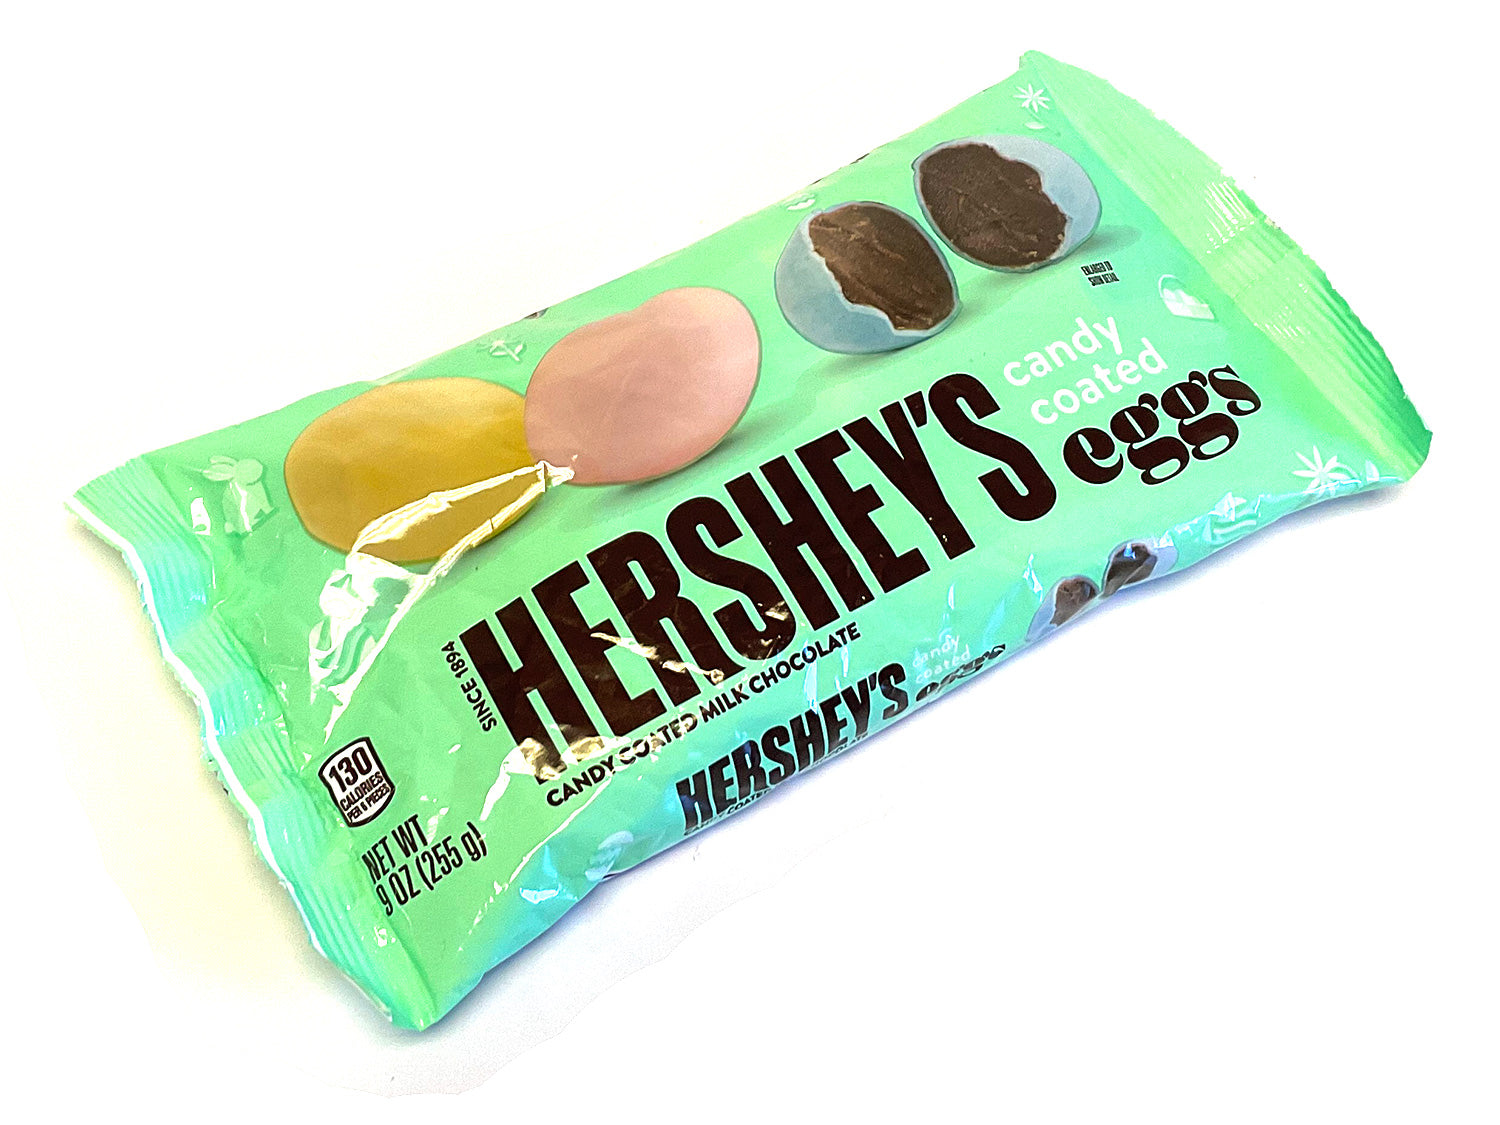 Hershey's Candy Coated Eggs - 9 oz bag